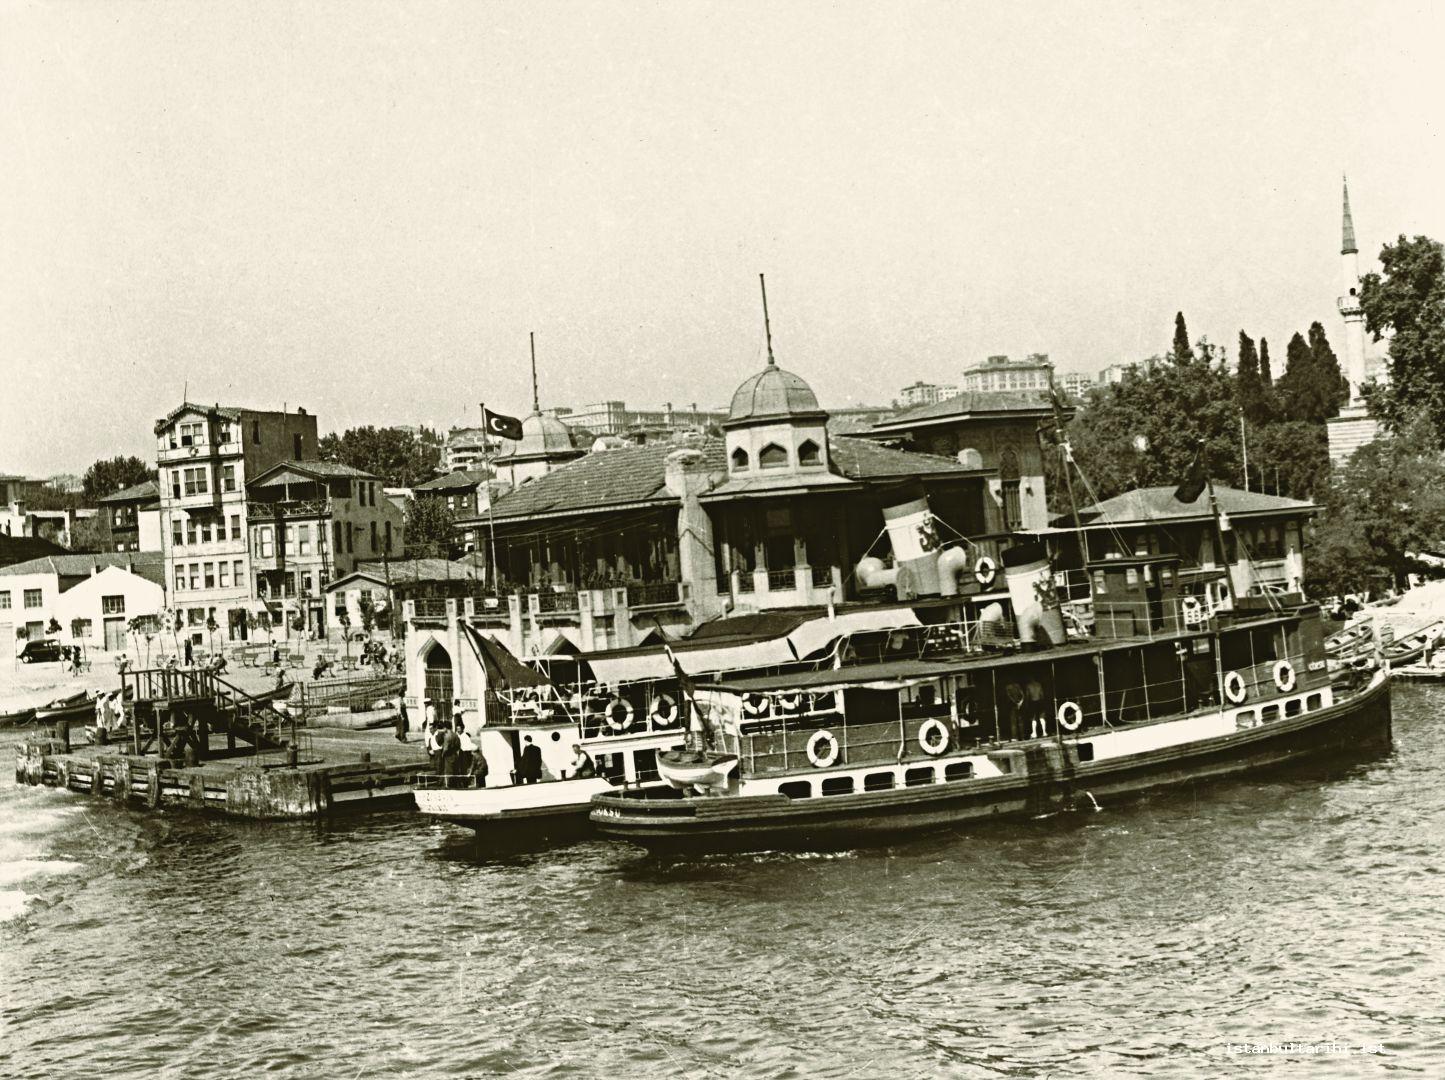 14- The appearance of Beşiktaş pier about seventy years ago